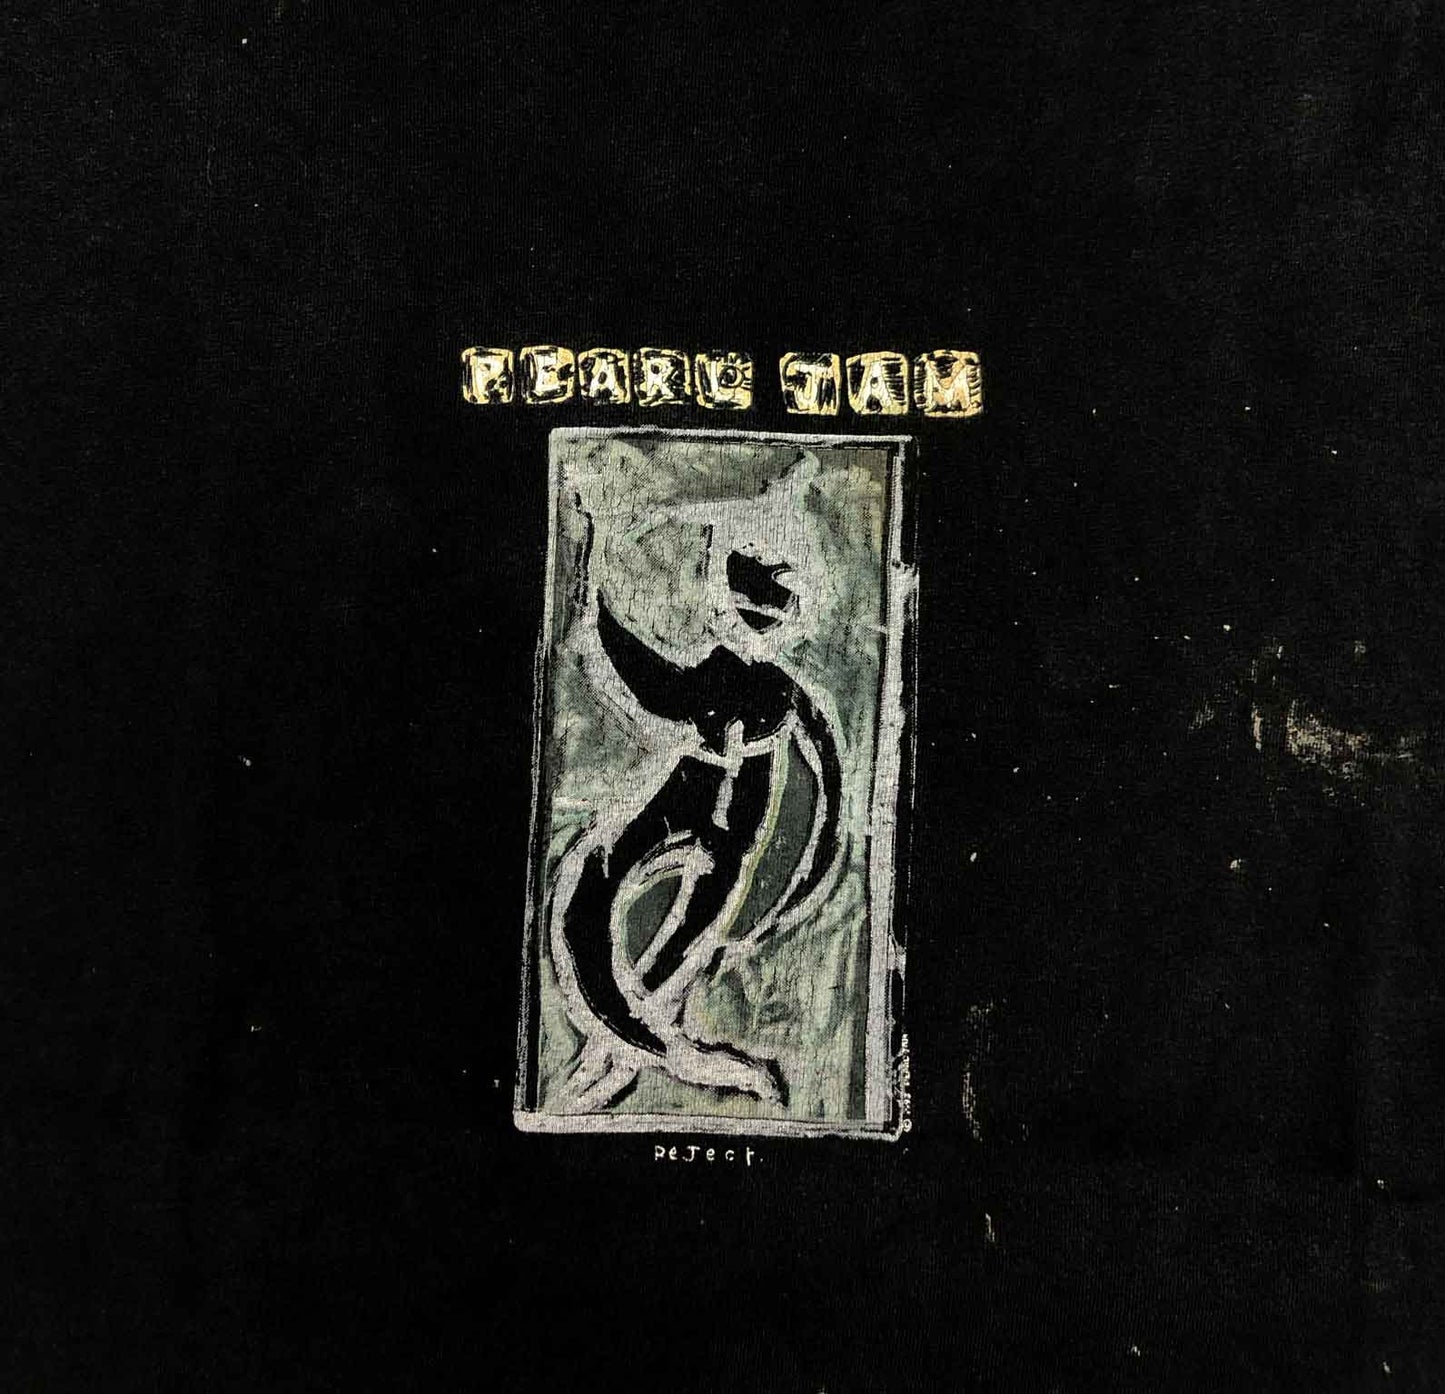 1993 PEARL JAM "Reject" Shirt - Two Vault Vintage